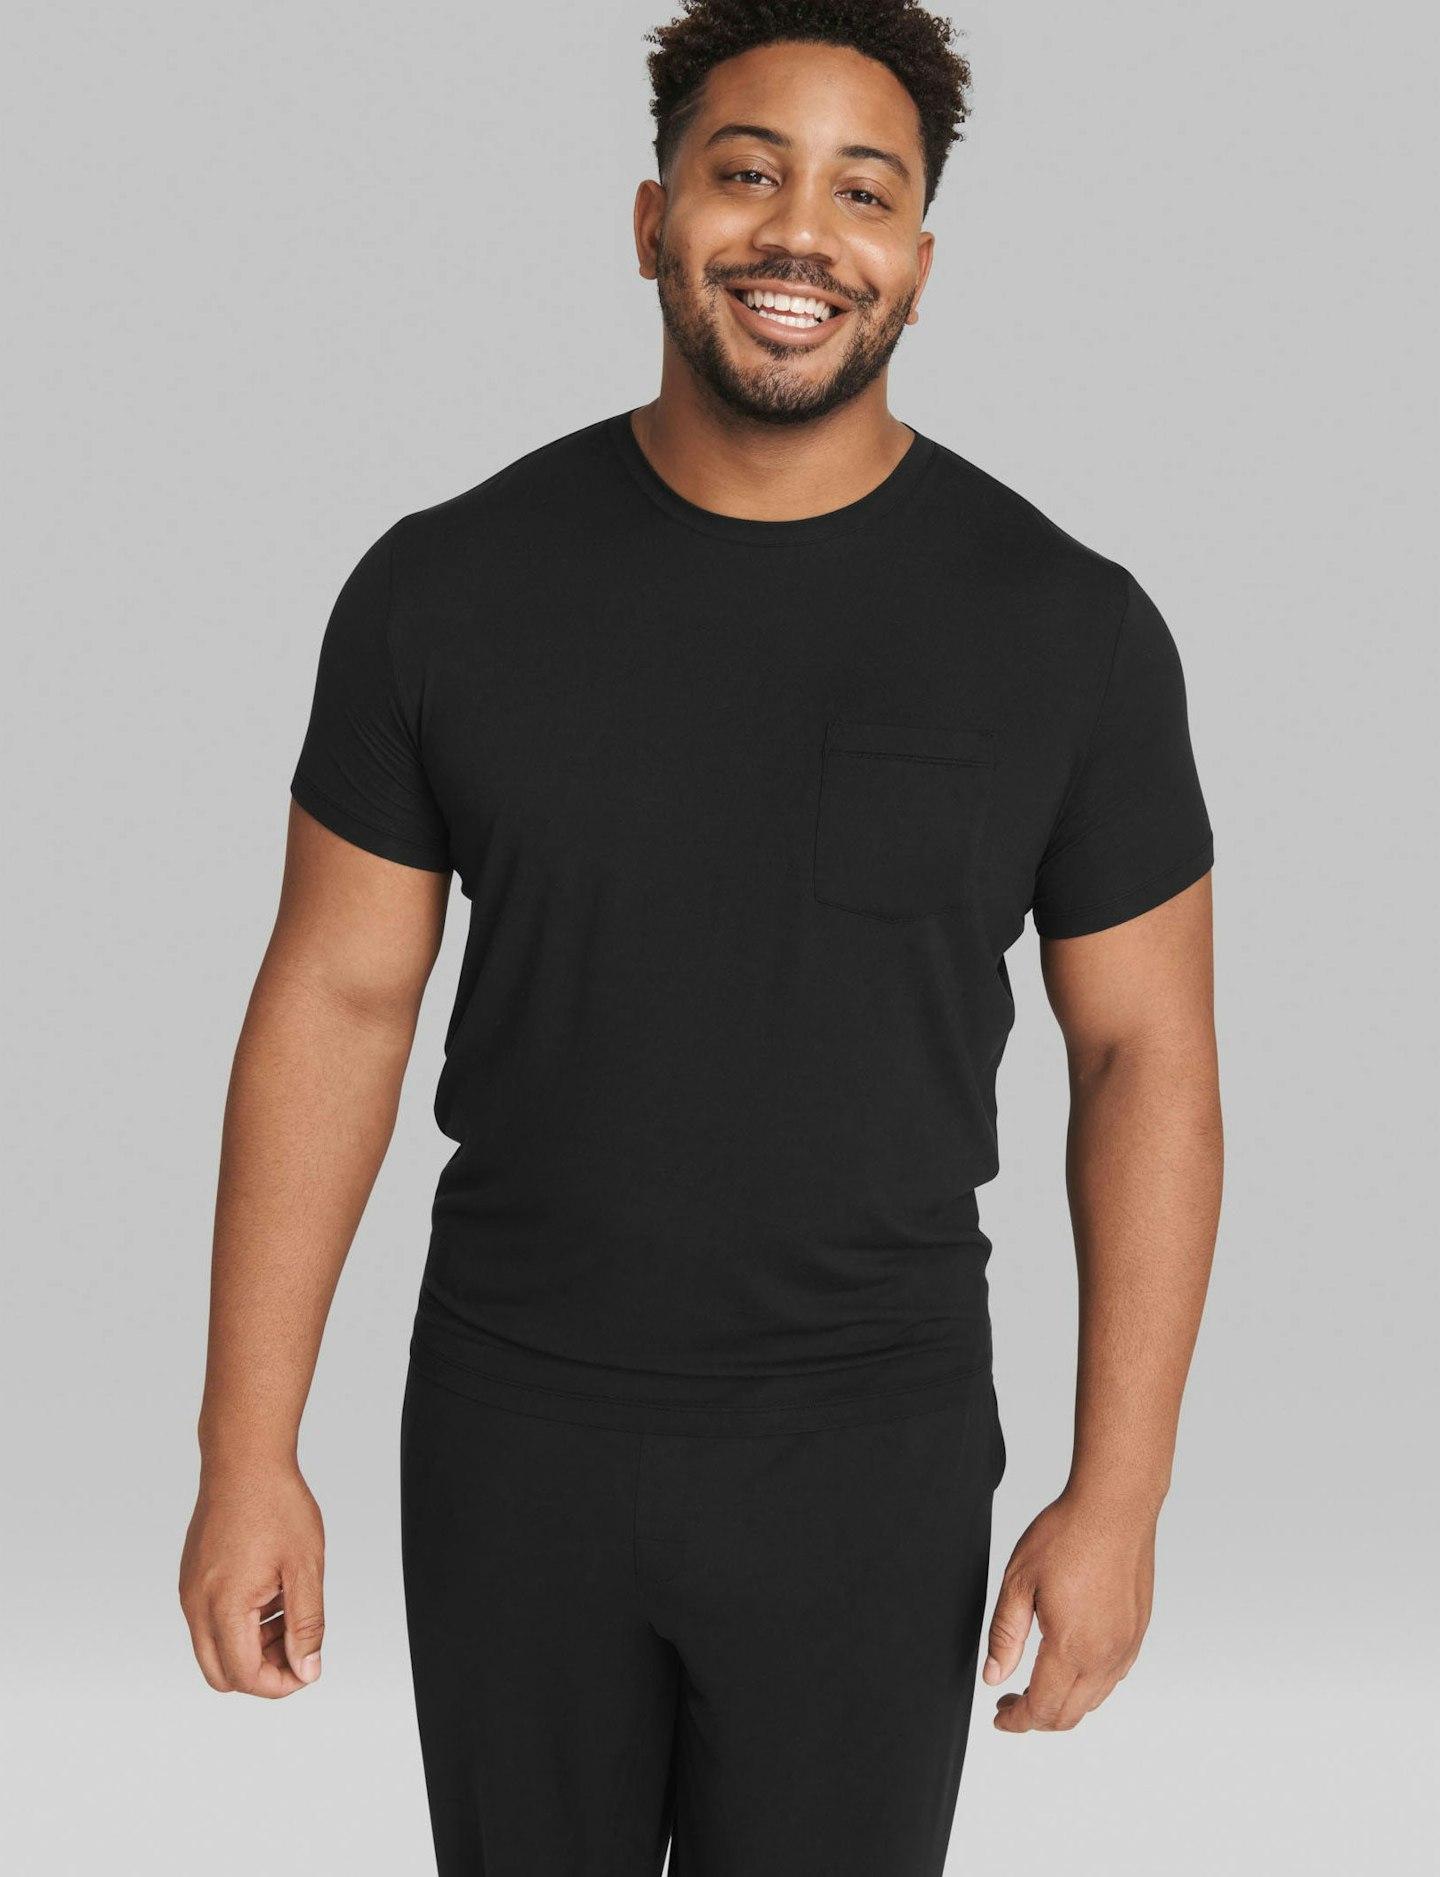 Next Level Men's Black Unisex Pocket Crew T-Shirt